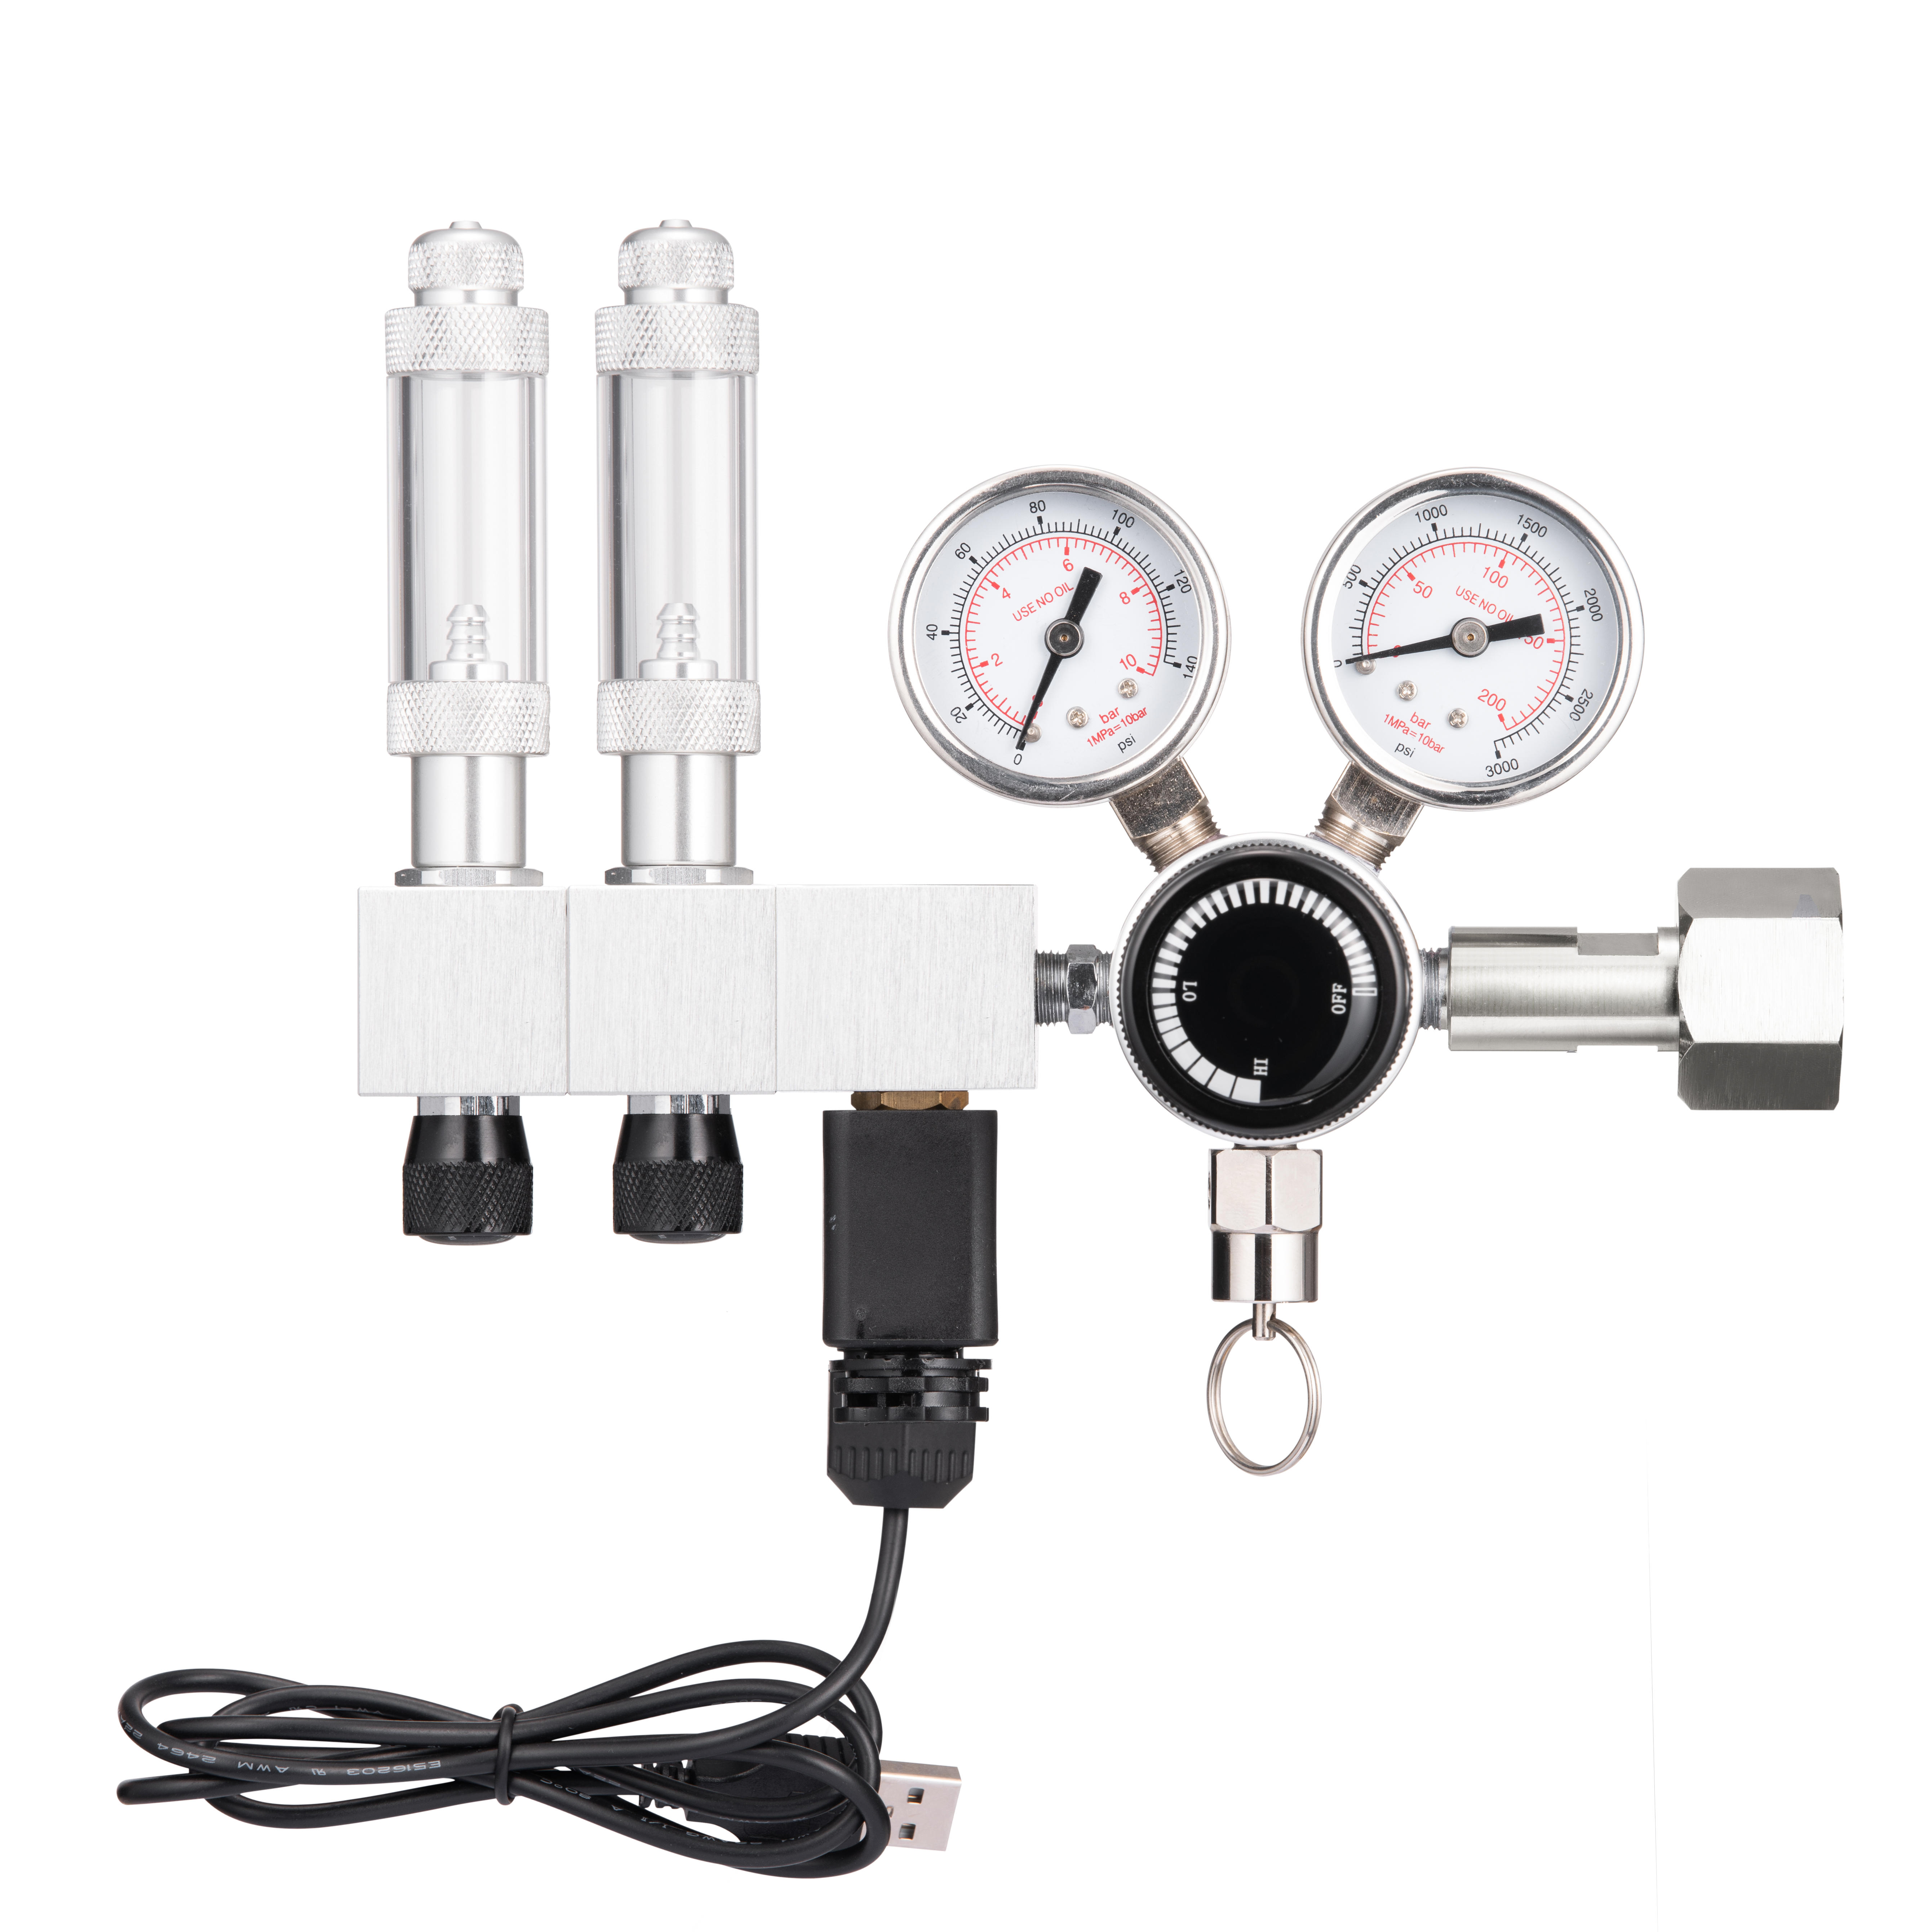 Co2 pressure regulator for aquascaping